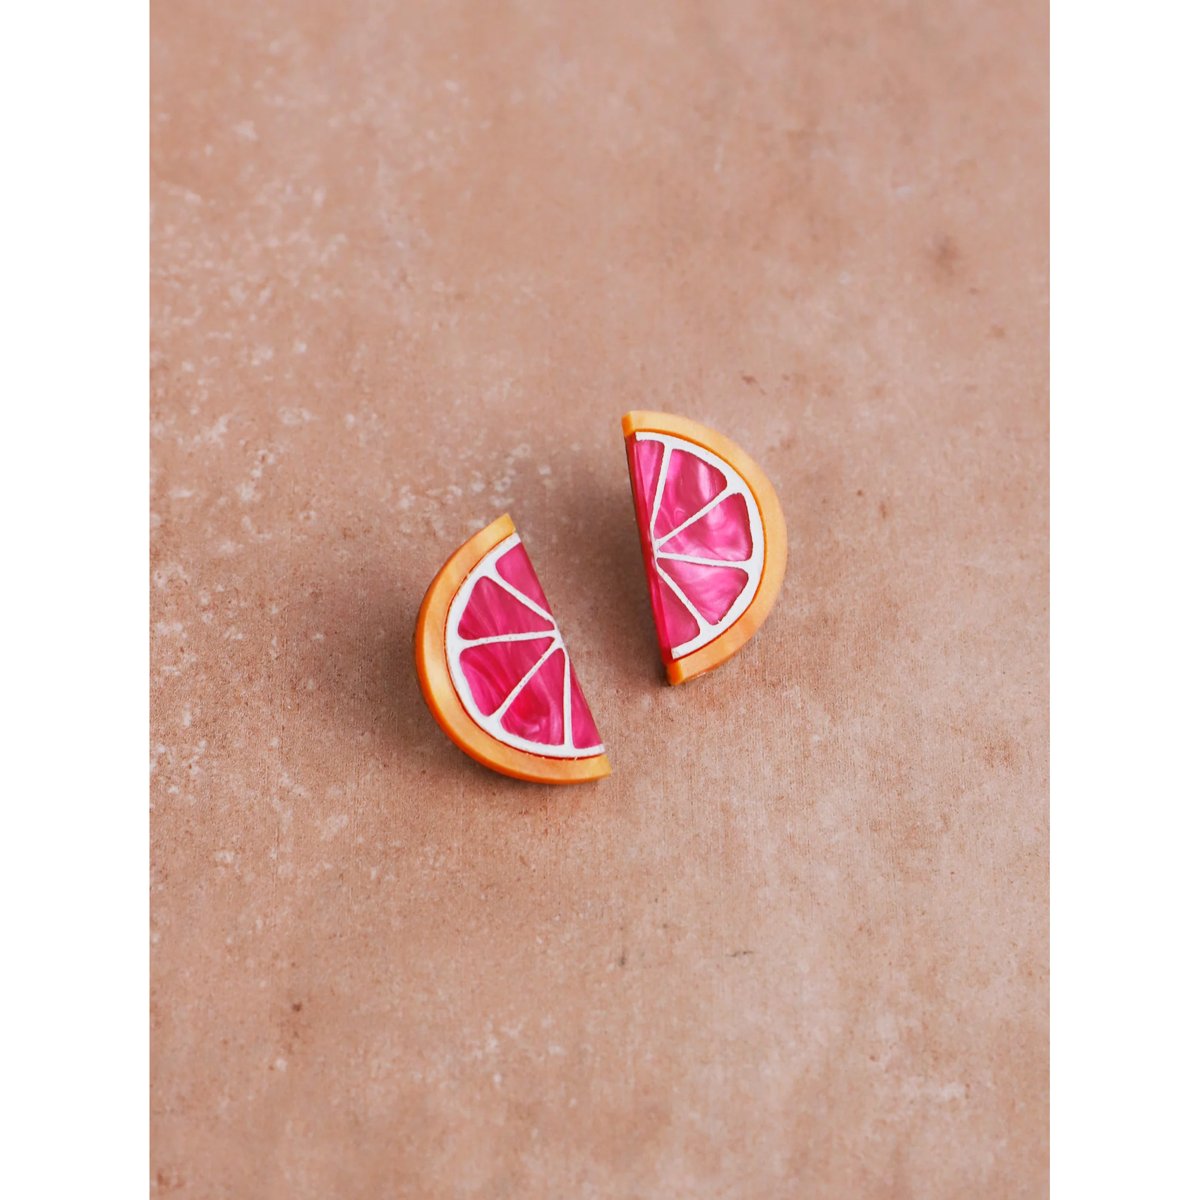 mondocherry - Wolf & Moon | grapefruit slice stud earrings